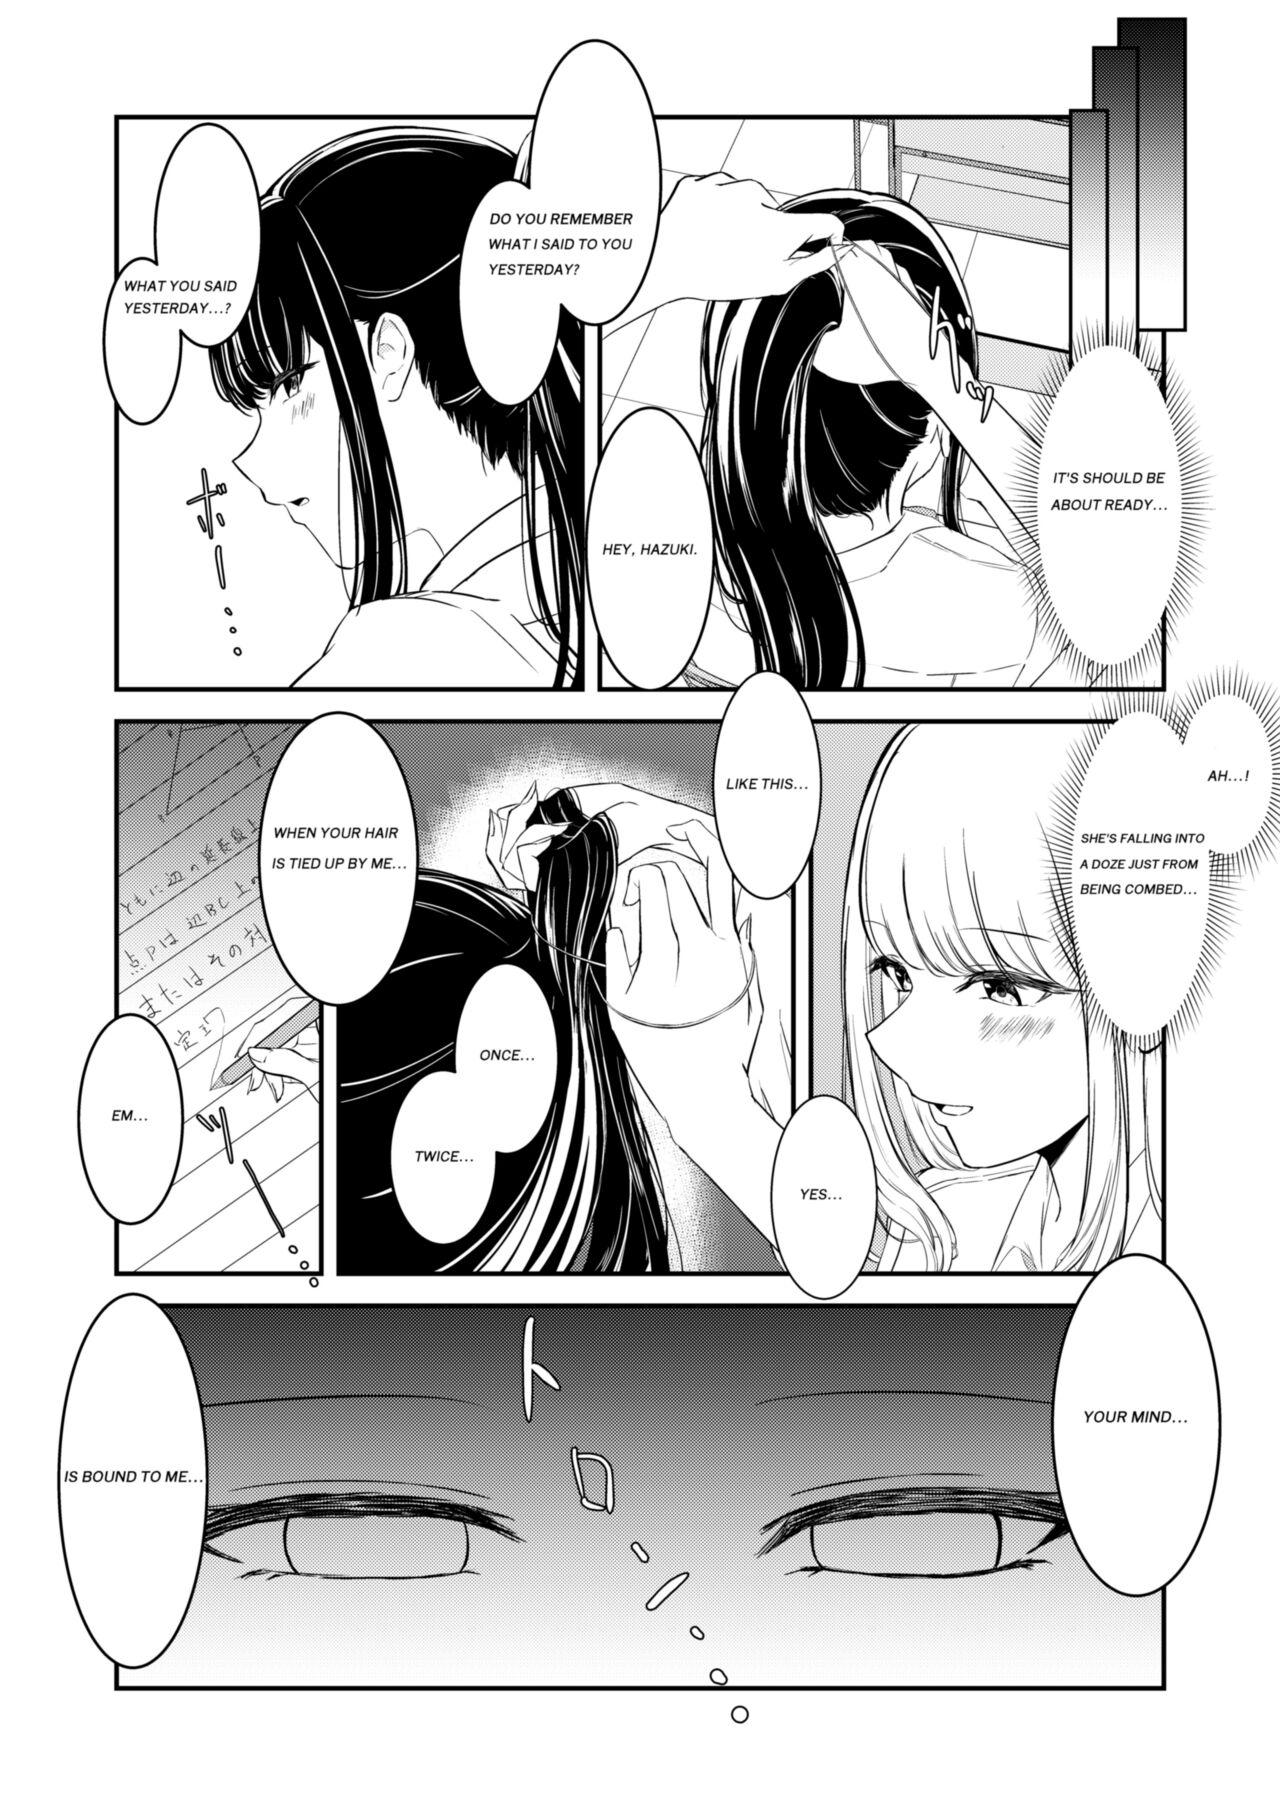 Yuri comic Part 1 and 2. 9